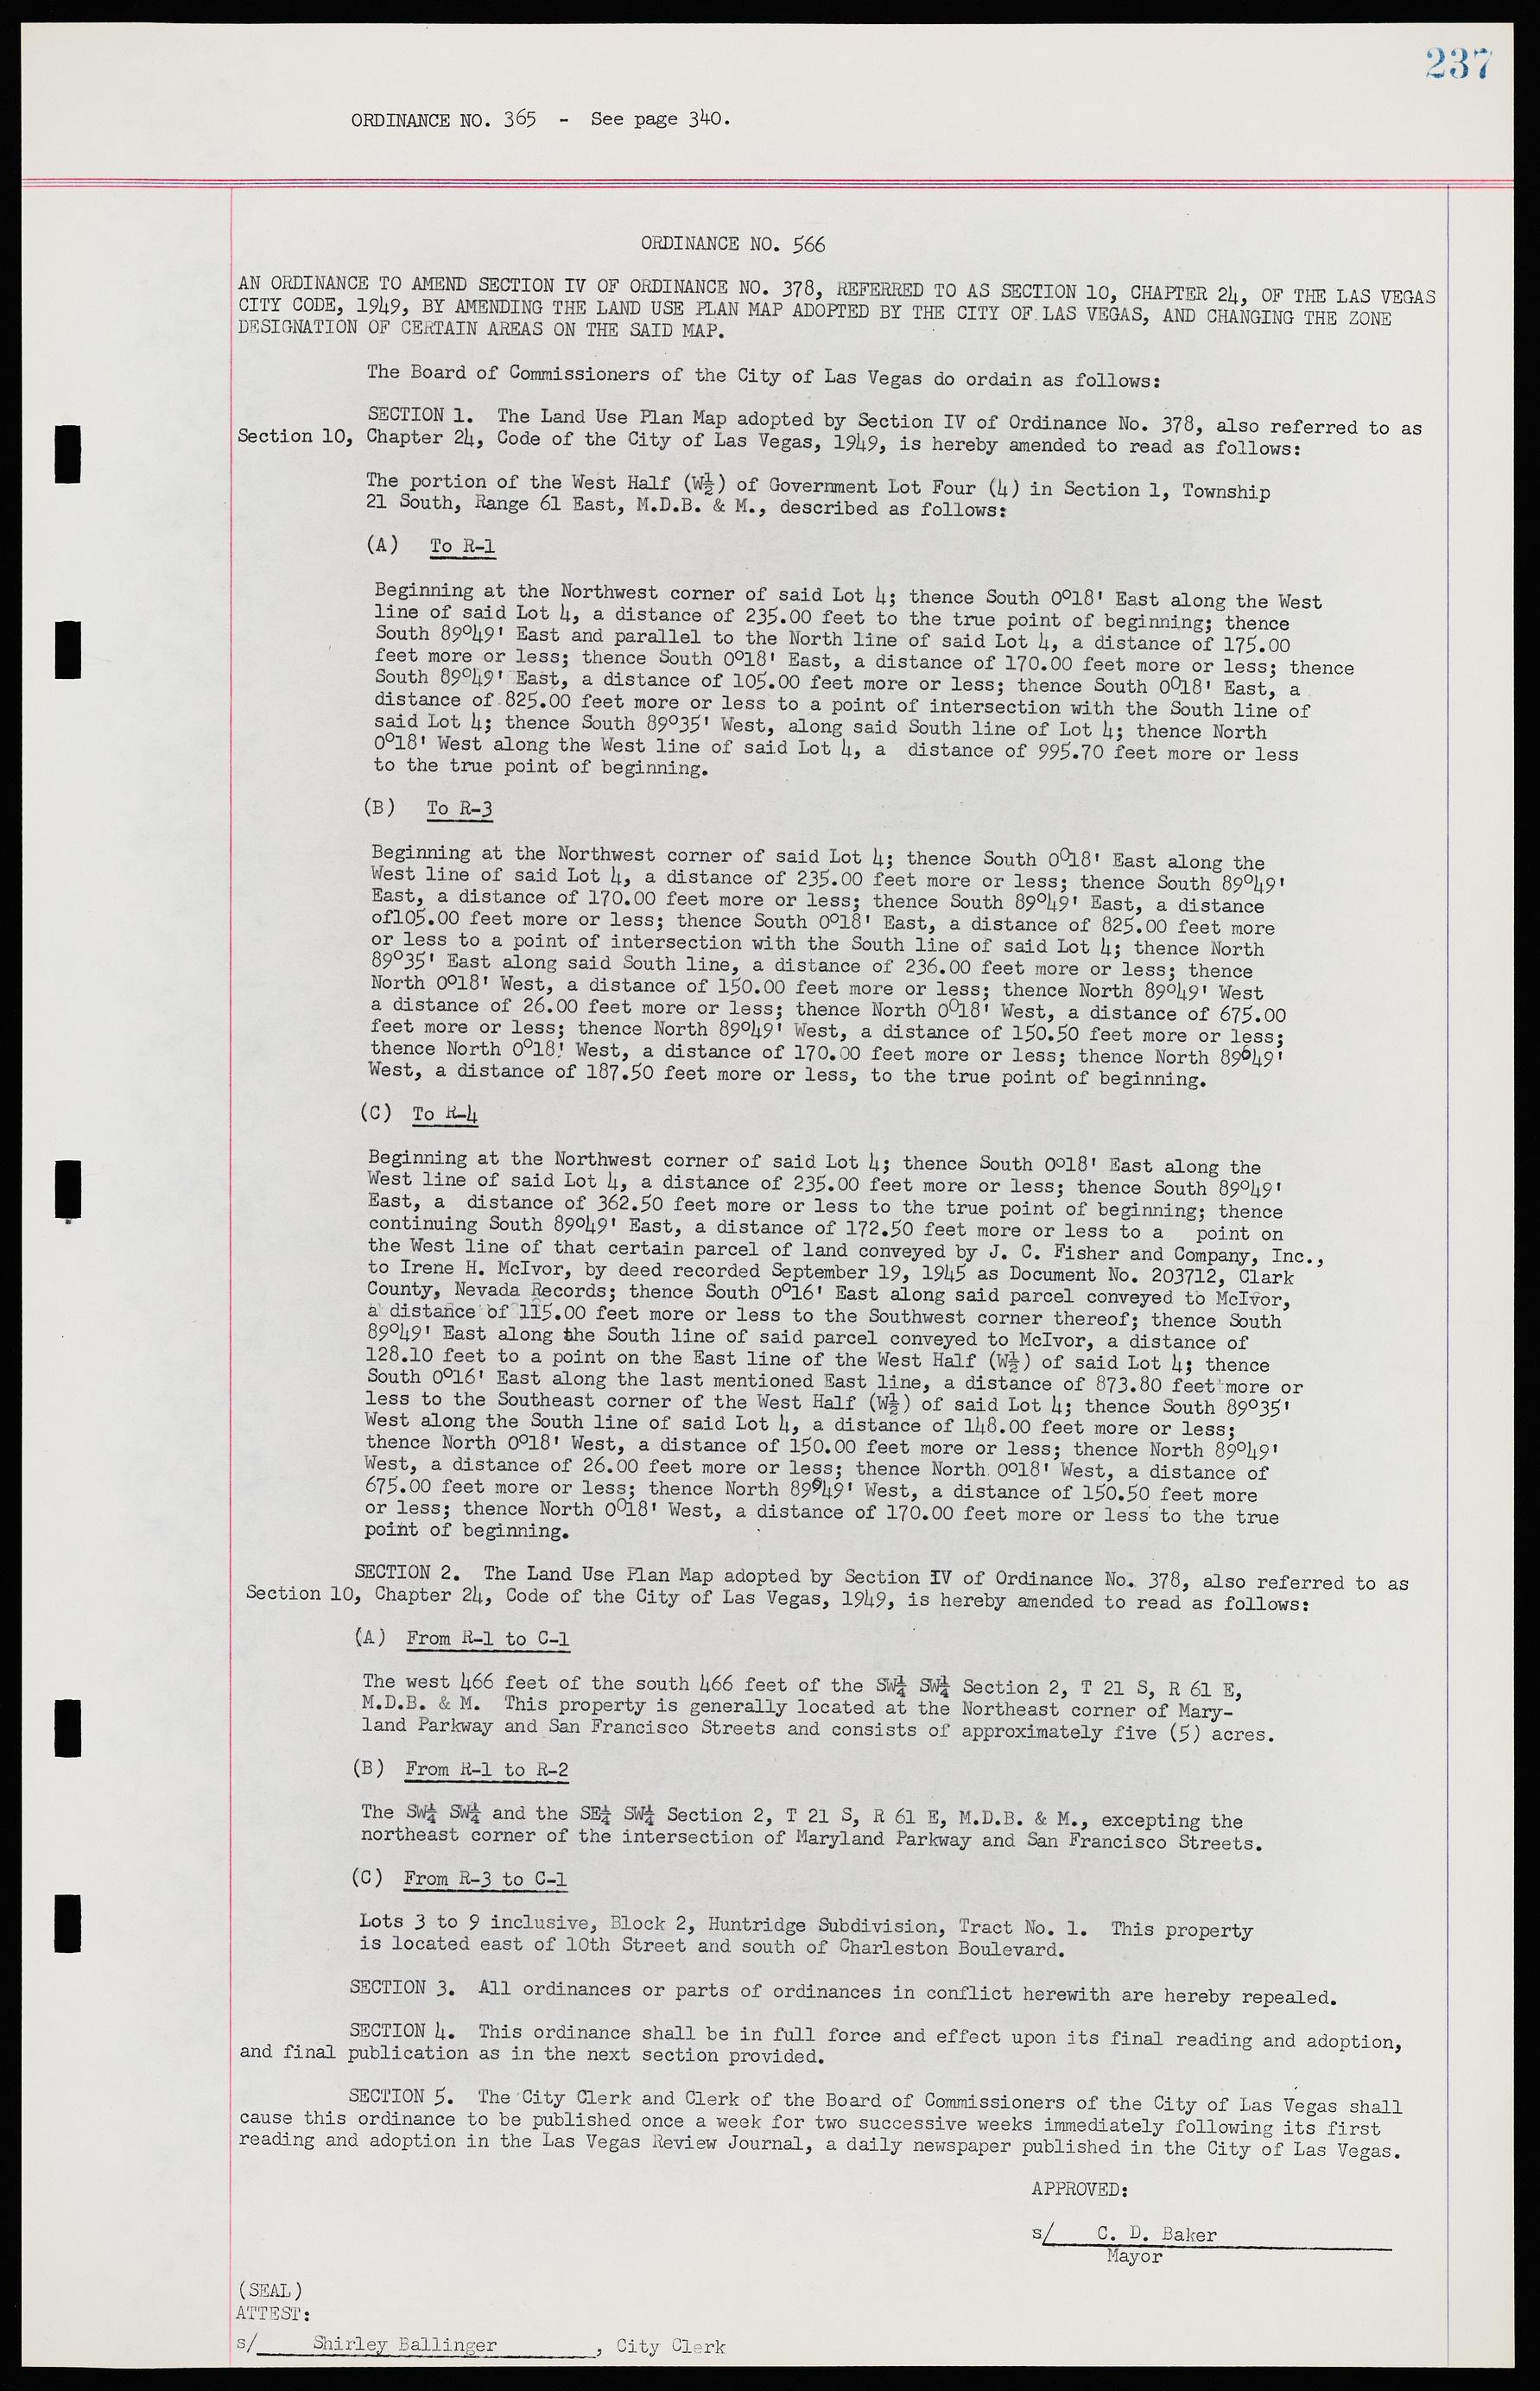 Las Vegas City Ordinances, November 13, 1950 to August 6, 1958, lvc000015-245